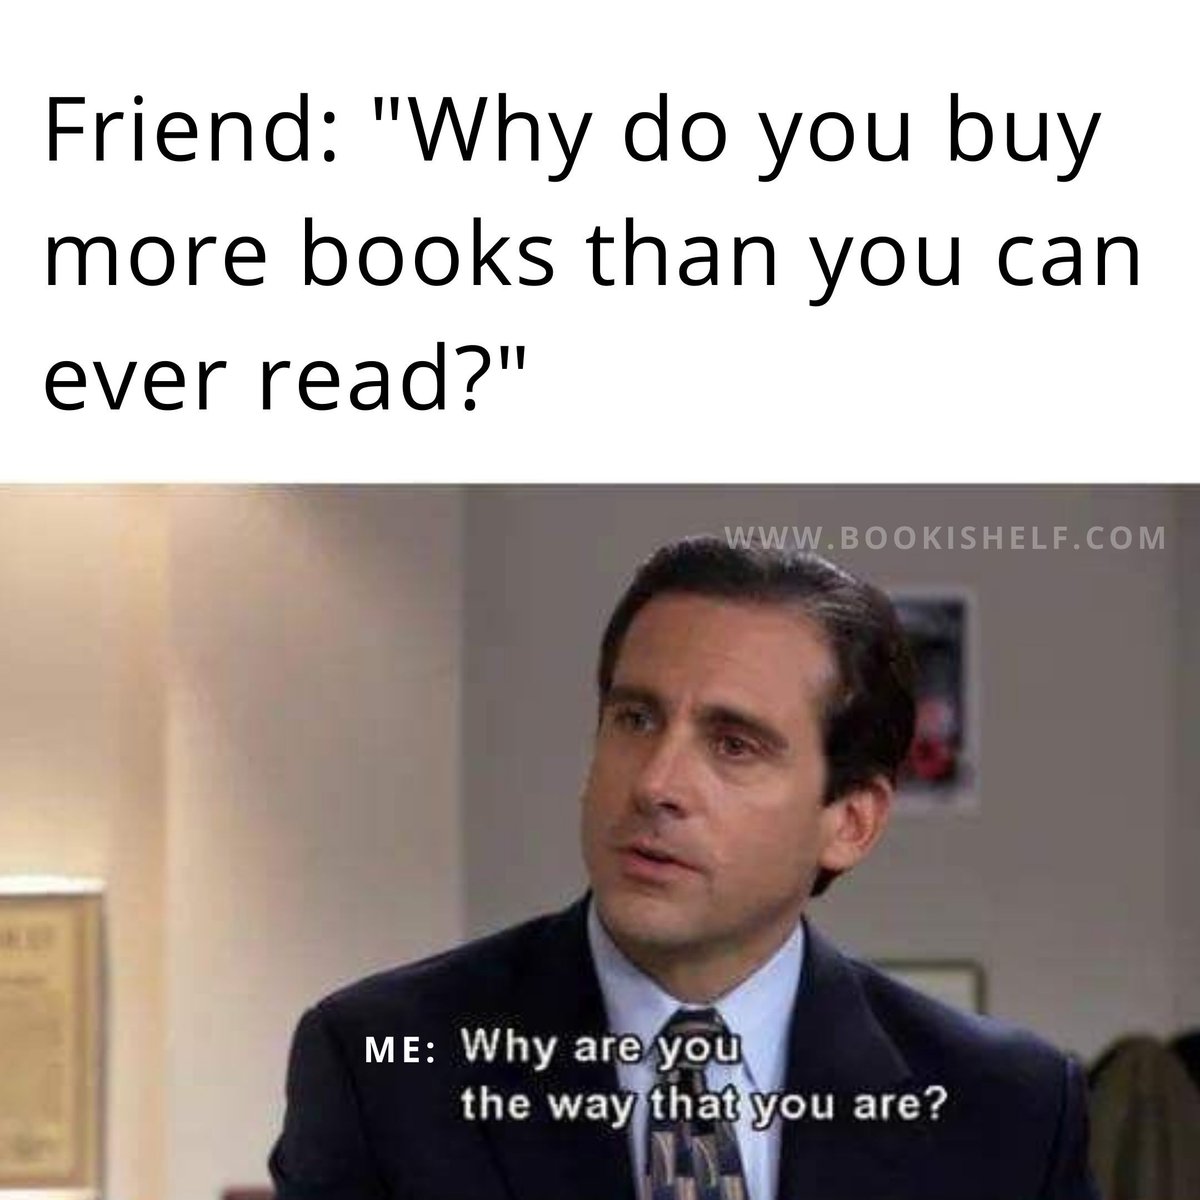 bookishelf.com #BookishElf #ReadersLoveBook #Bookstagram #Bookstagrammer #BookWorm #Books #Reader #BookLover #BookLove #Read #BookAddict #Novel #Fiction #BookShelf #Story #ReadersCorner #Bibliophile #BookNerd #Bookish #Literature #ILoveBooks #BookBlogger #AmReading